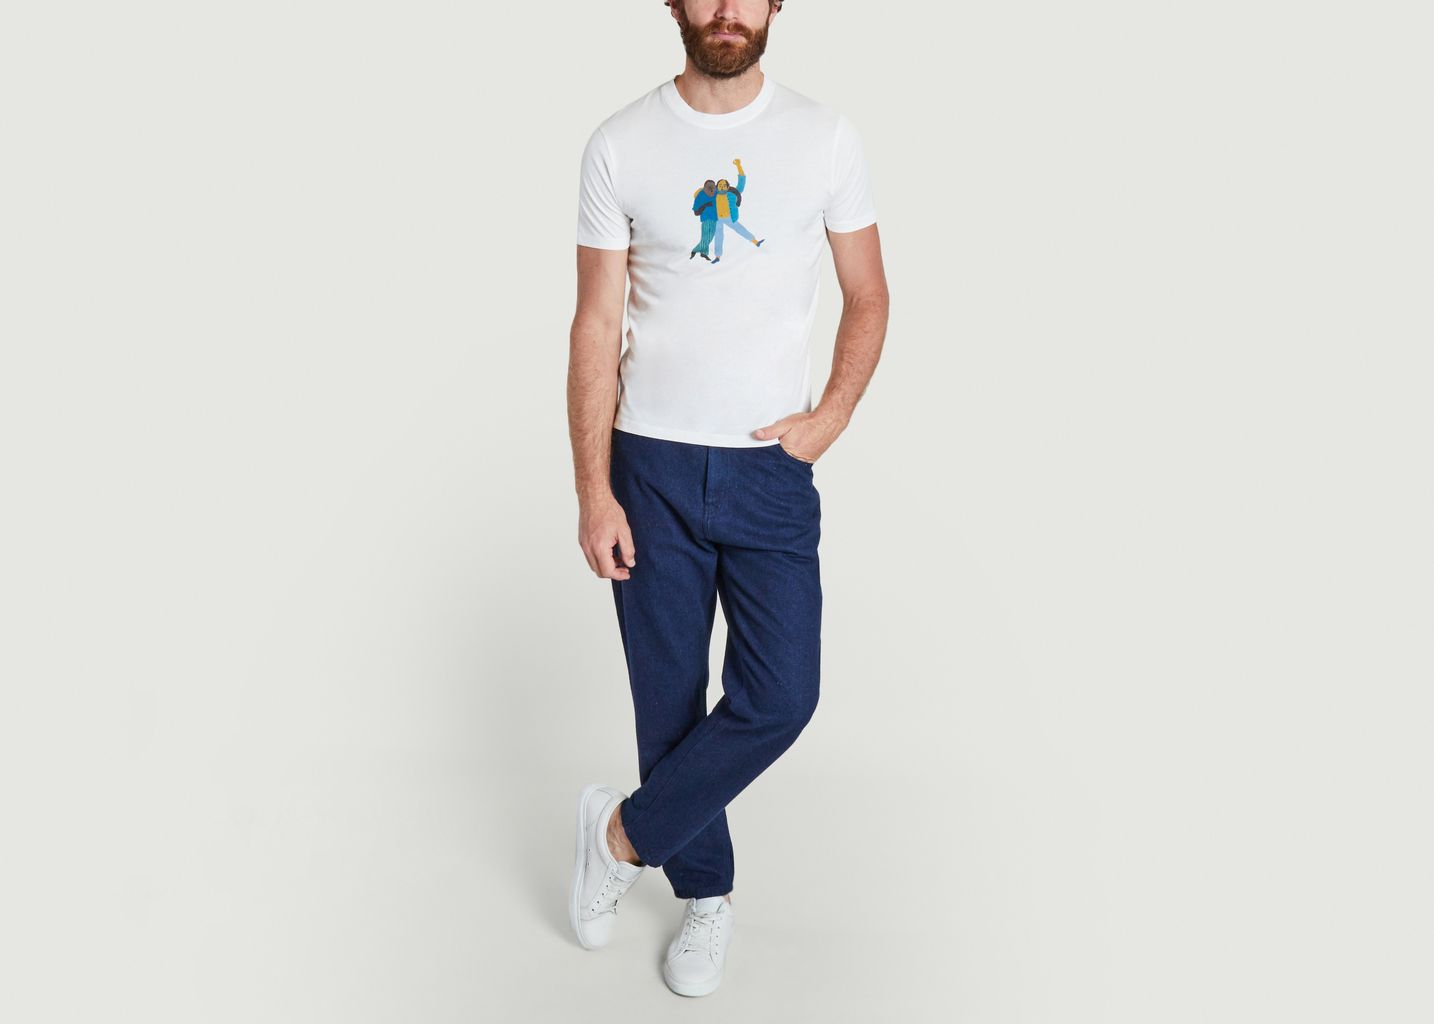 Pompette T-shirt - Olow